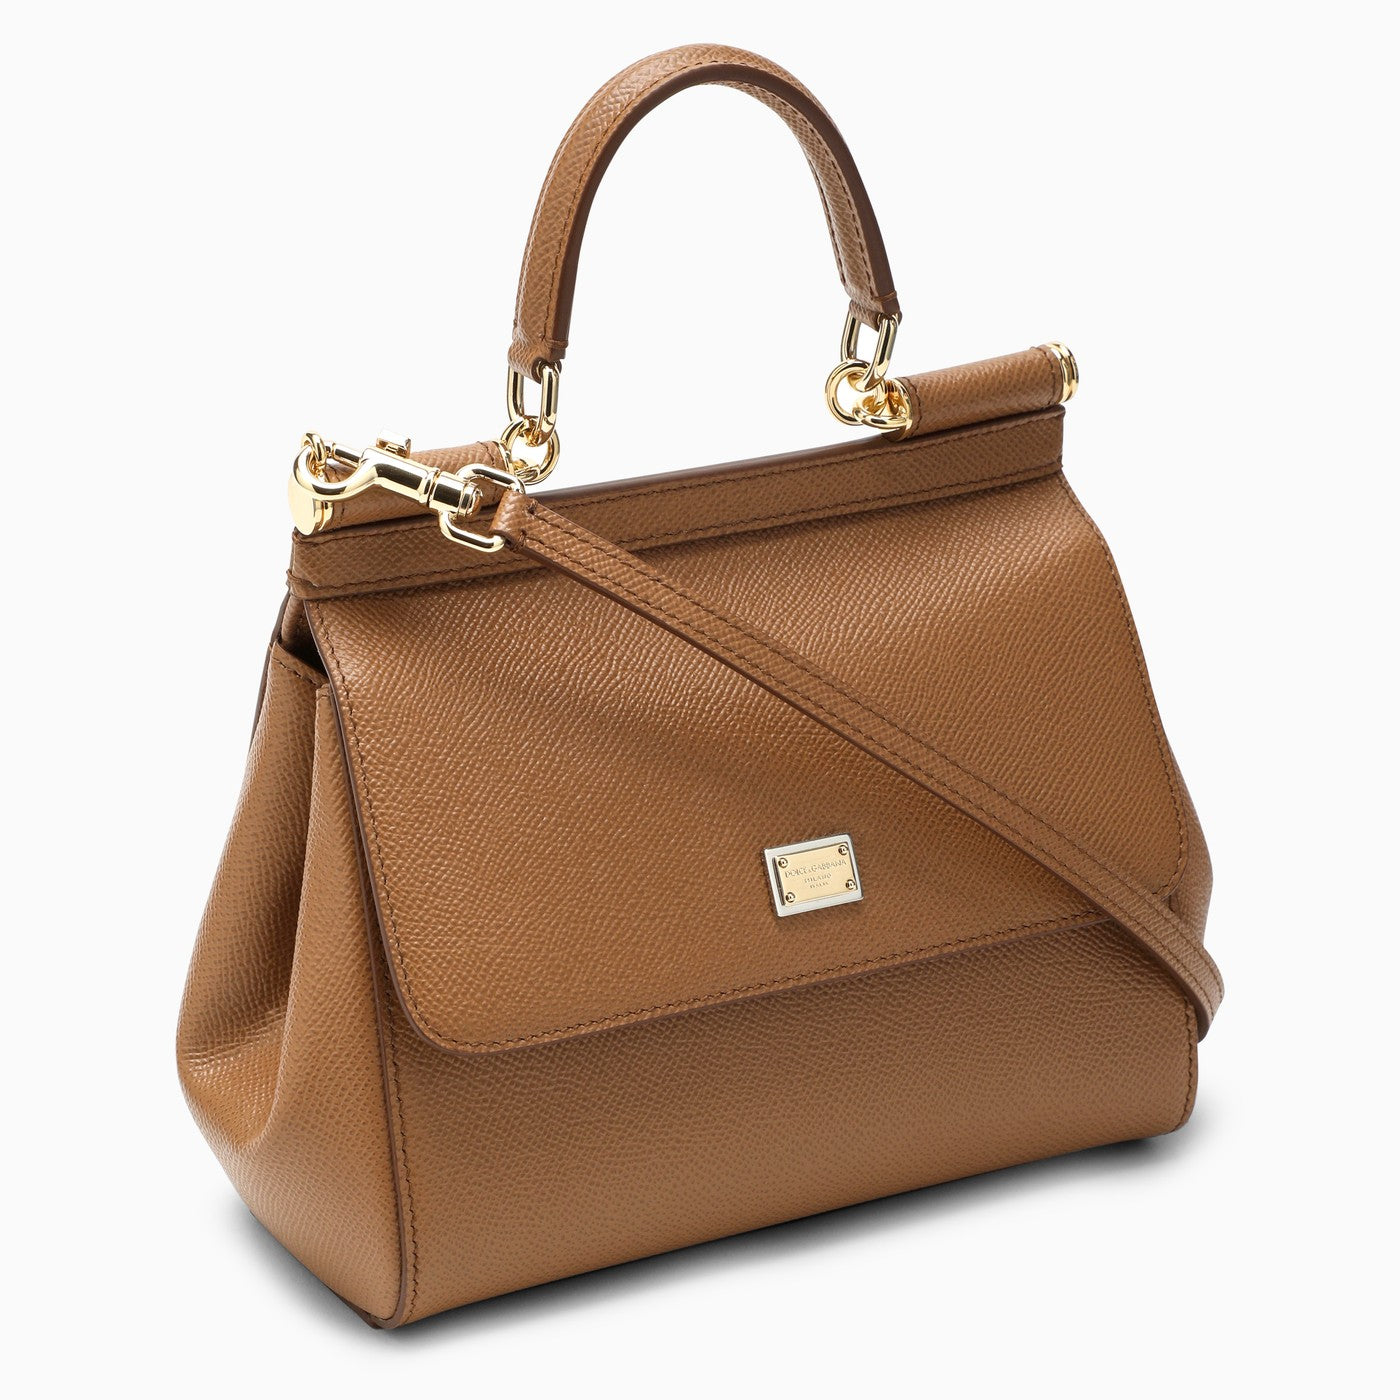 Dolce&Gabbana Beige Sicily Small Handbag